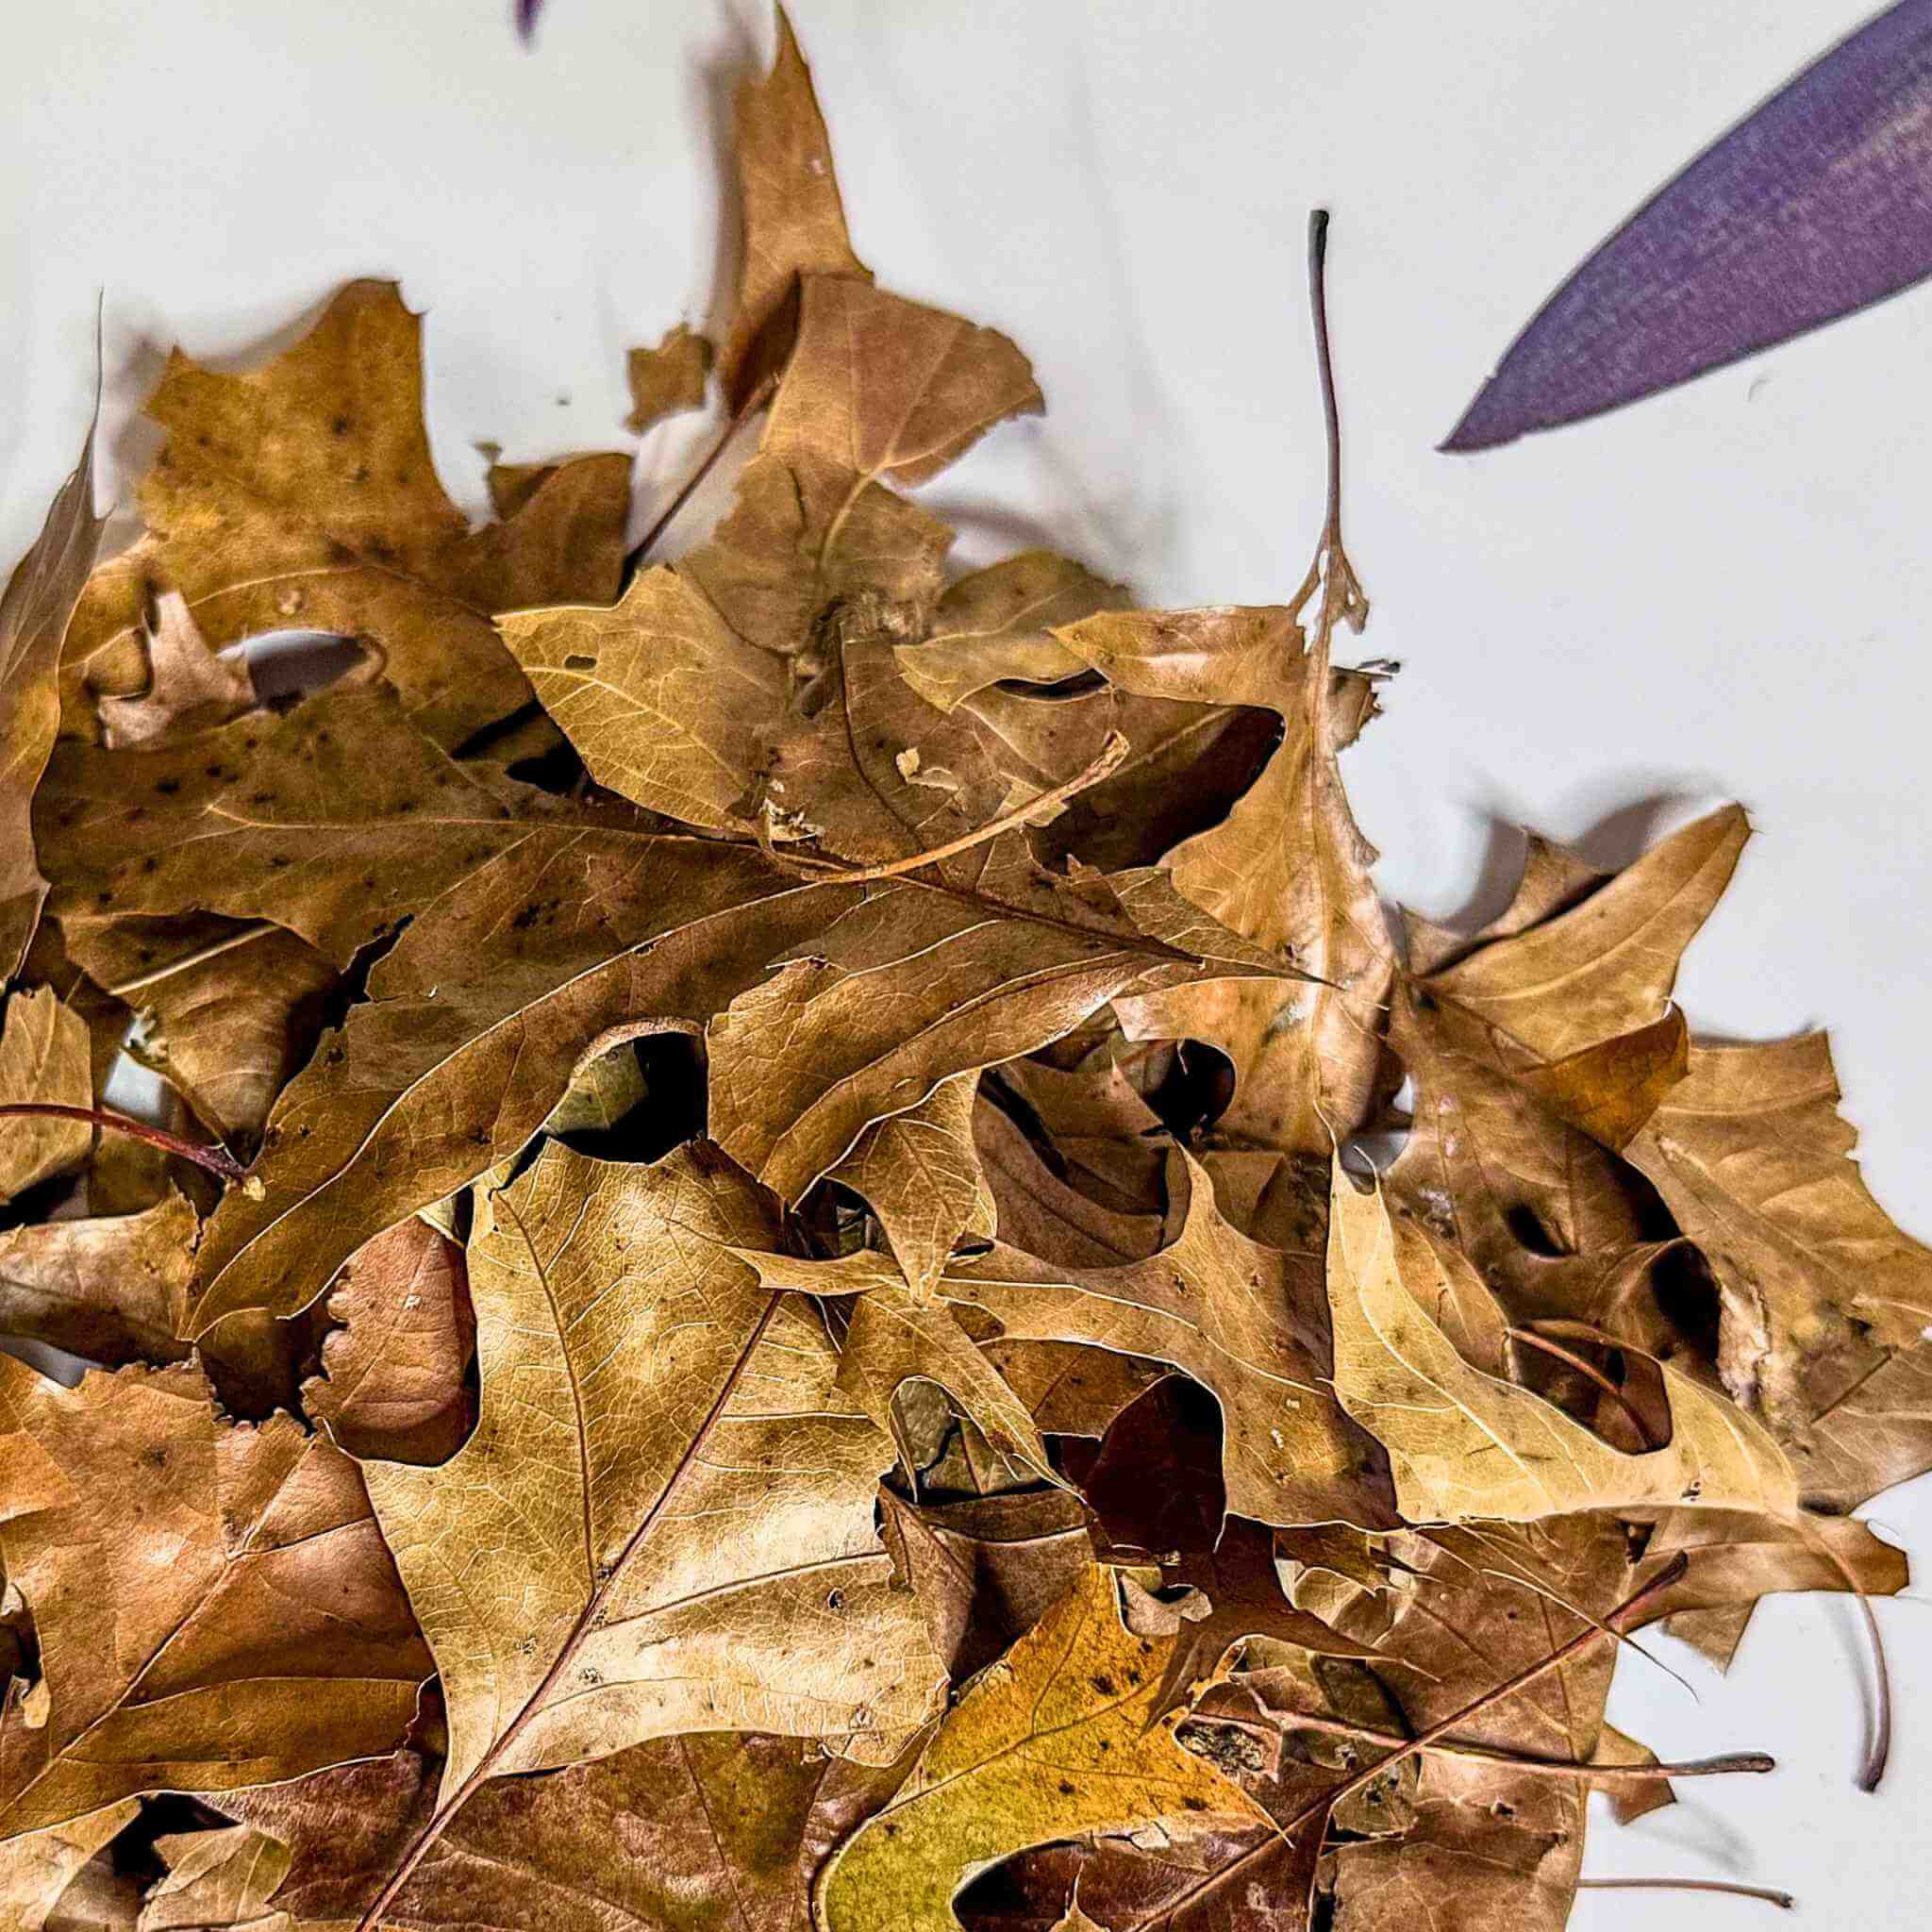 oak leaf litter up close